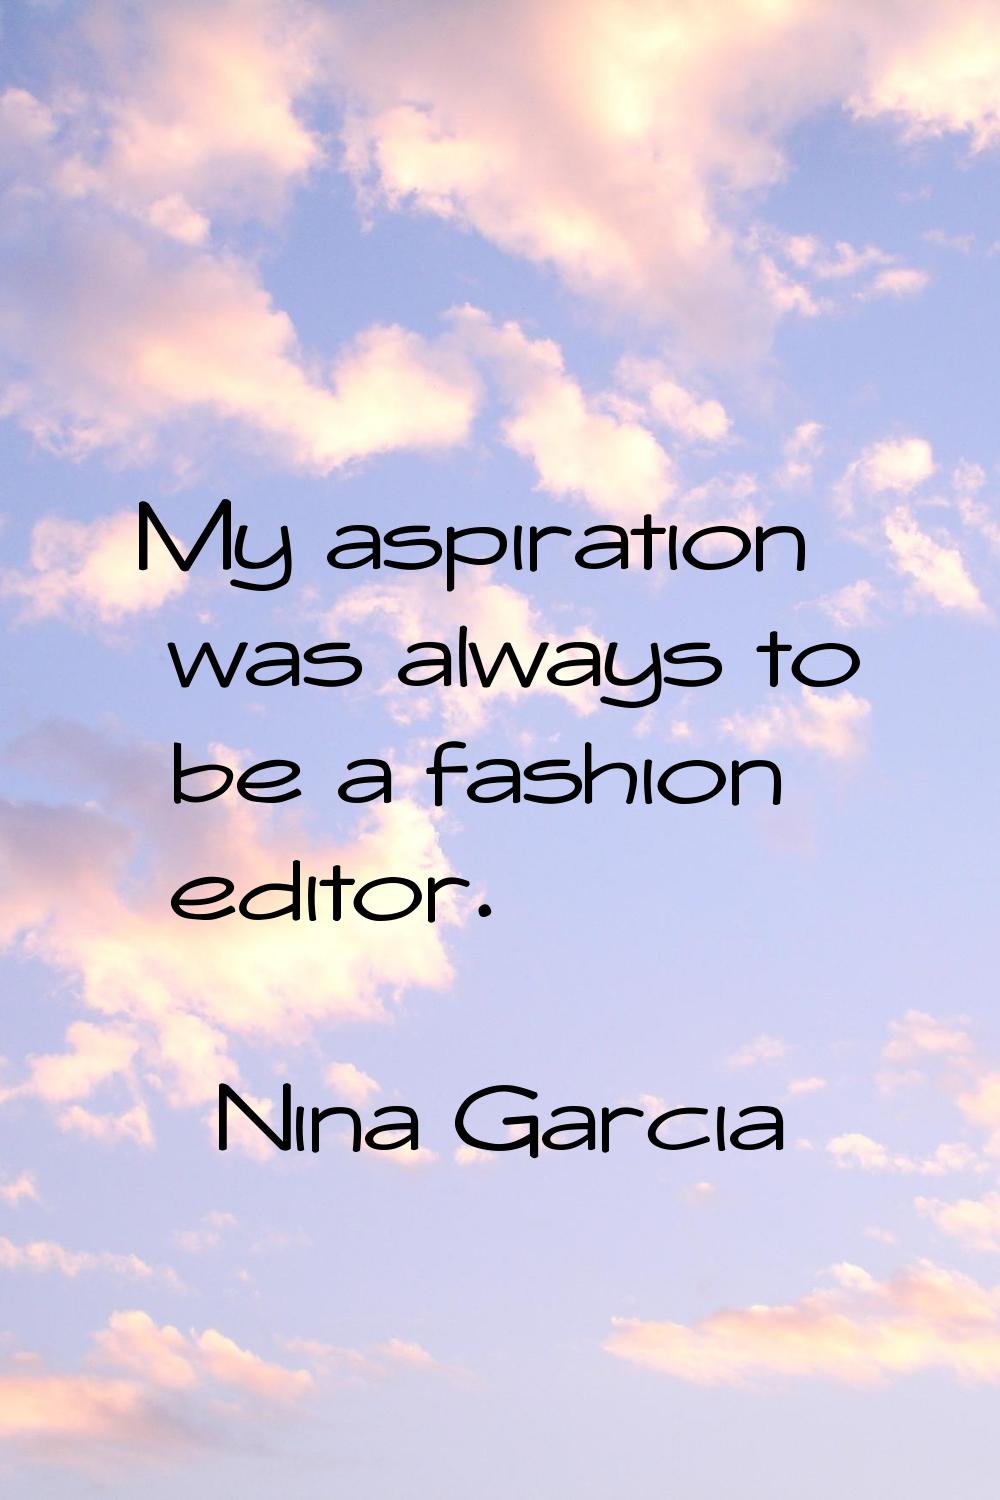 My aspiration was always to be a fashion editor.